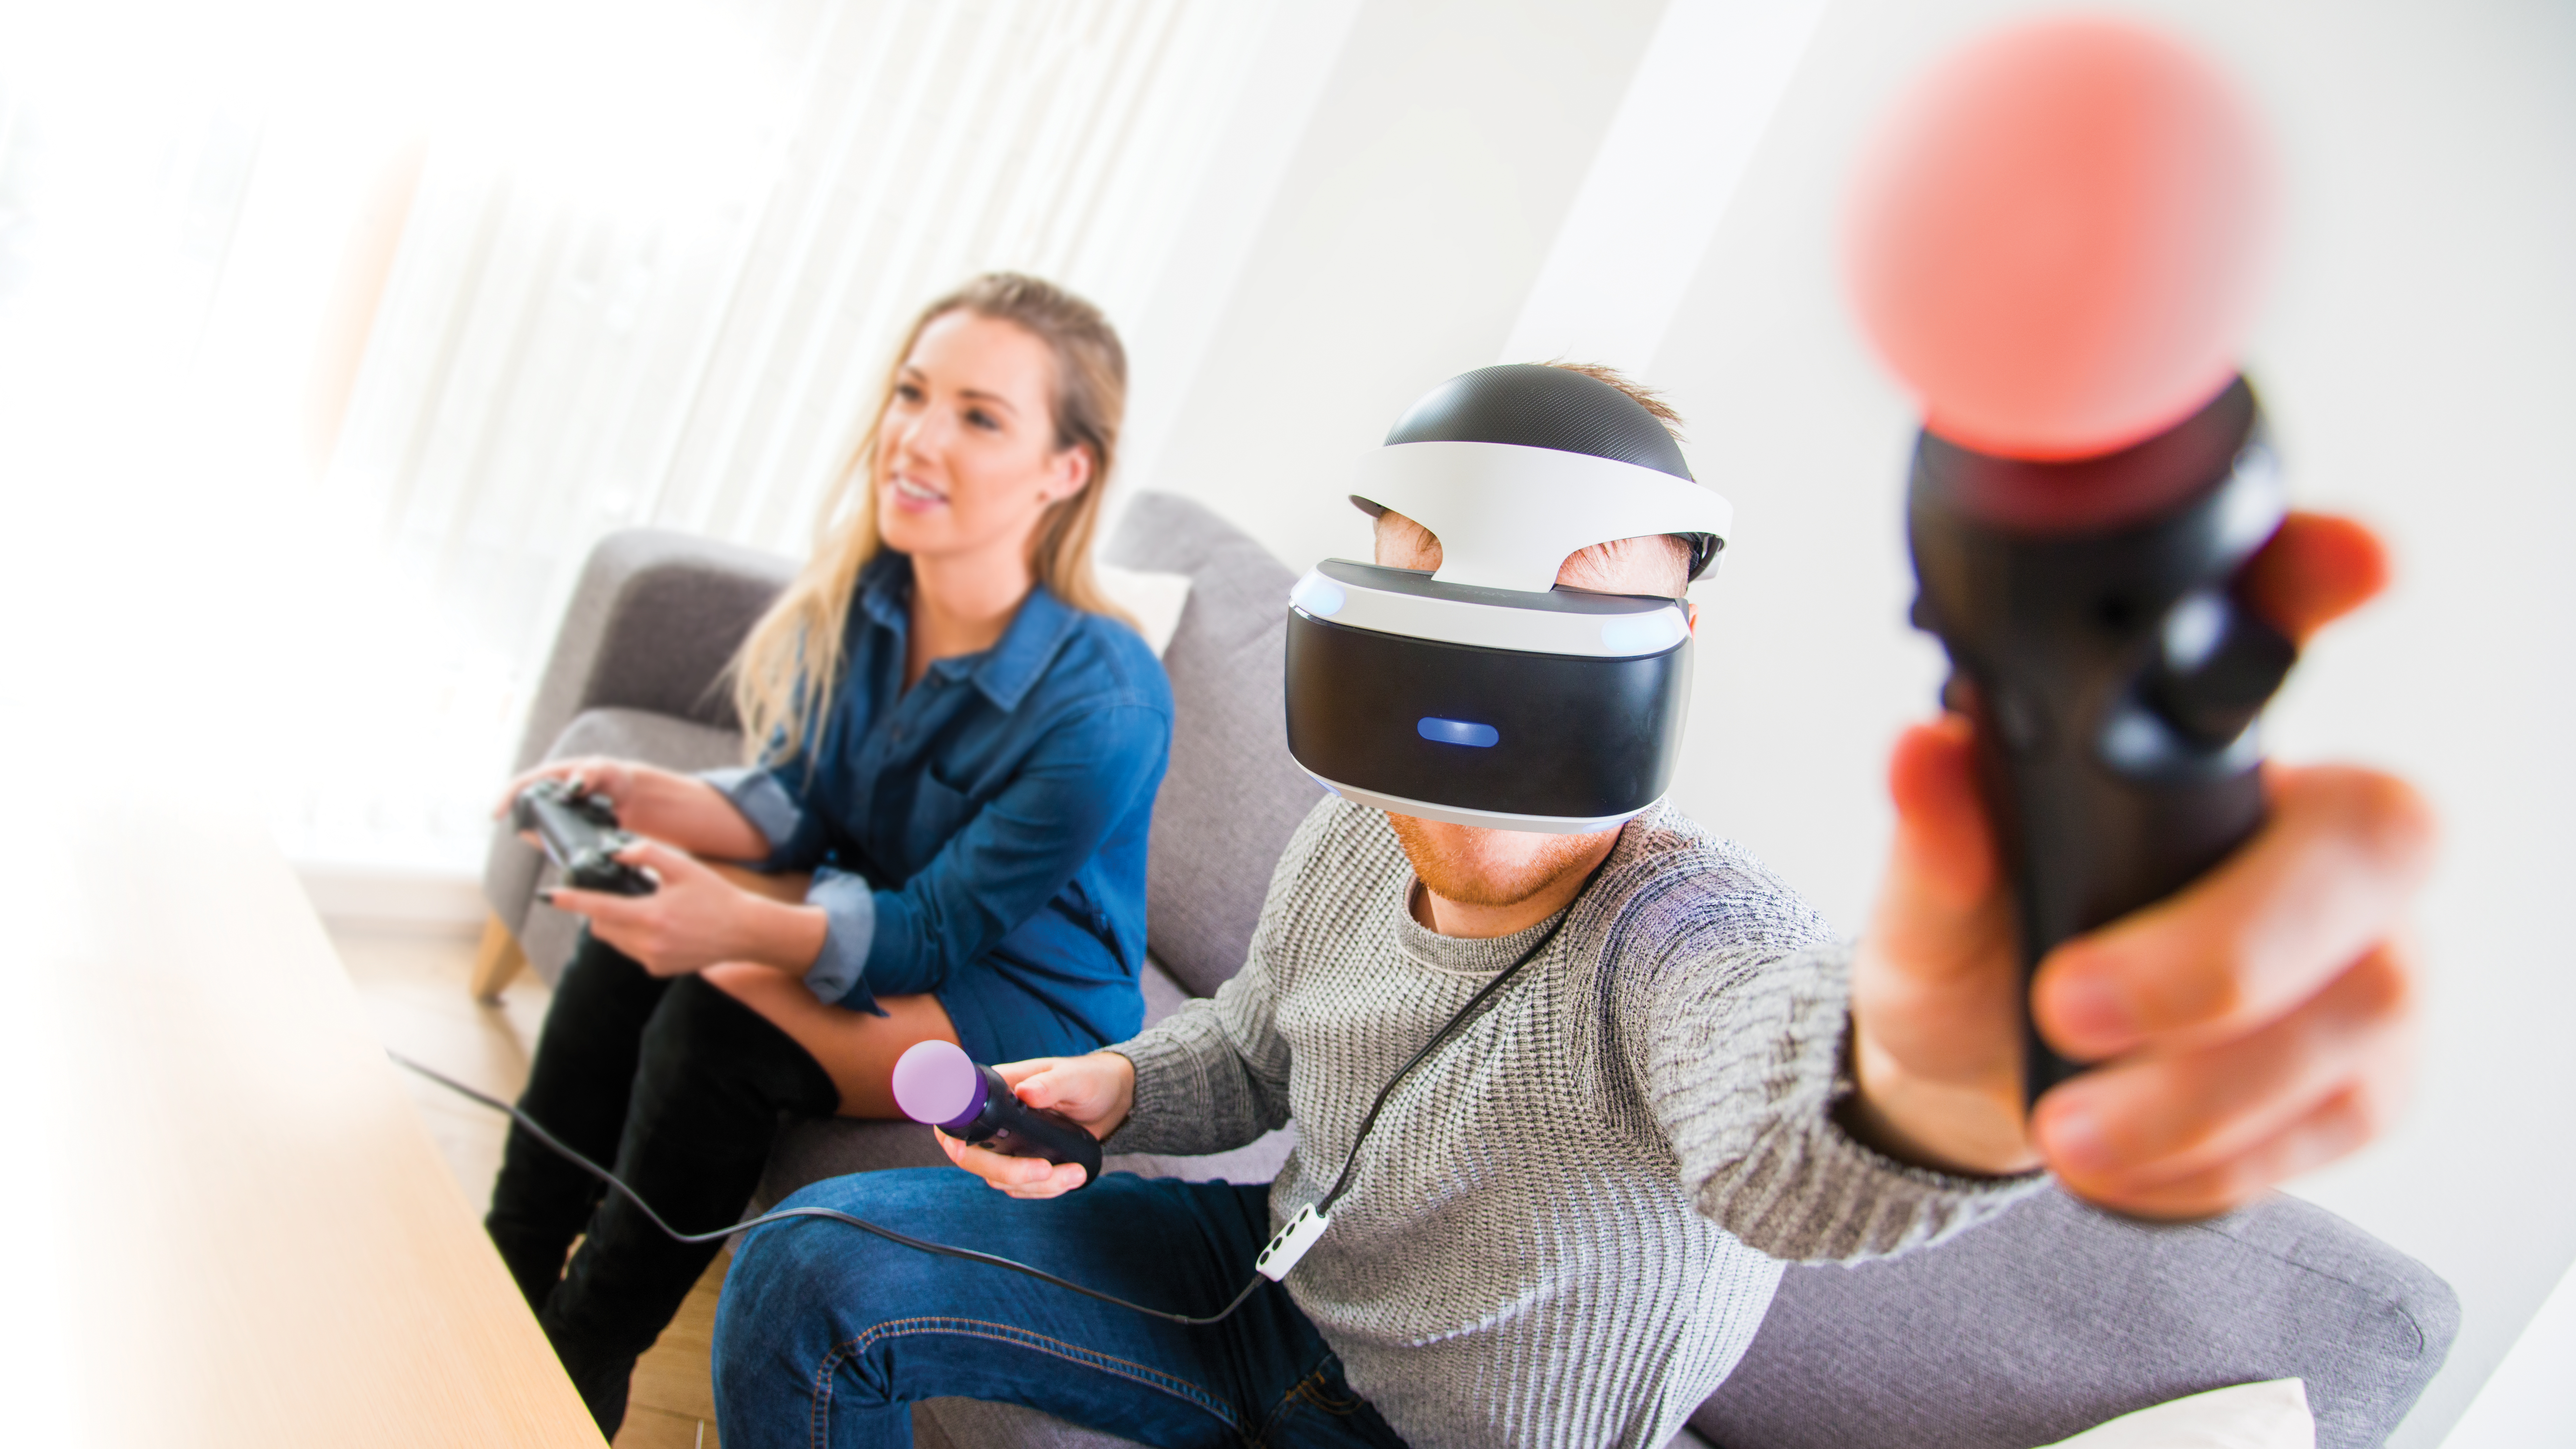 Multiplayer VR